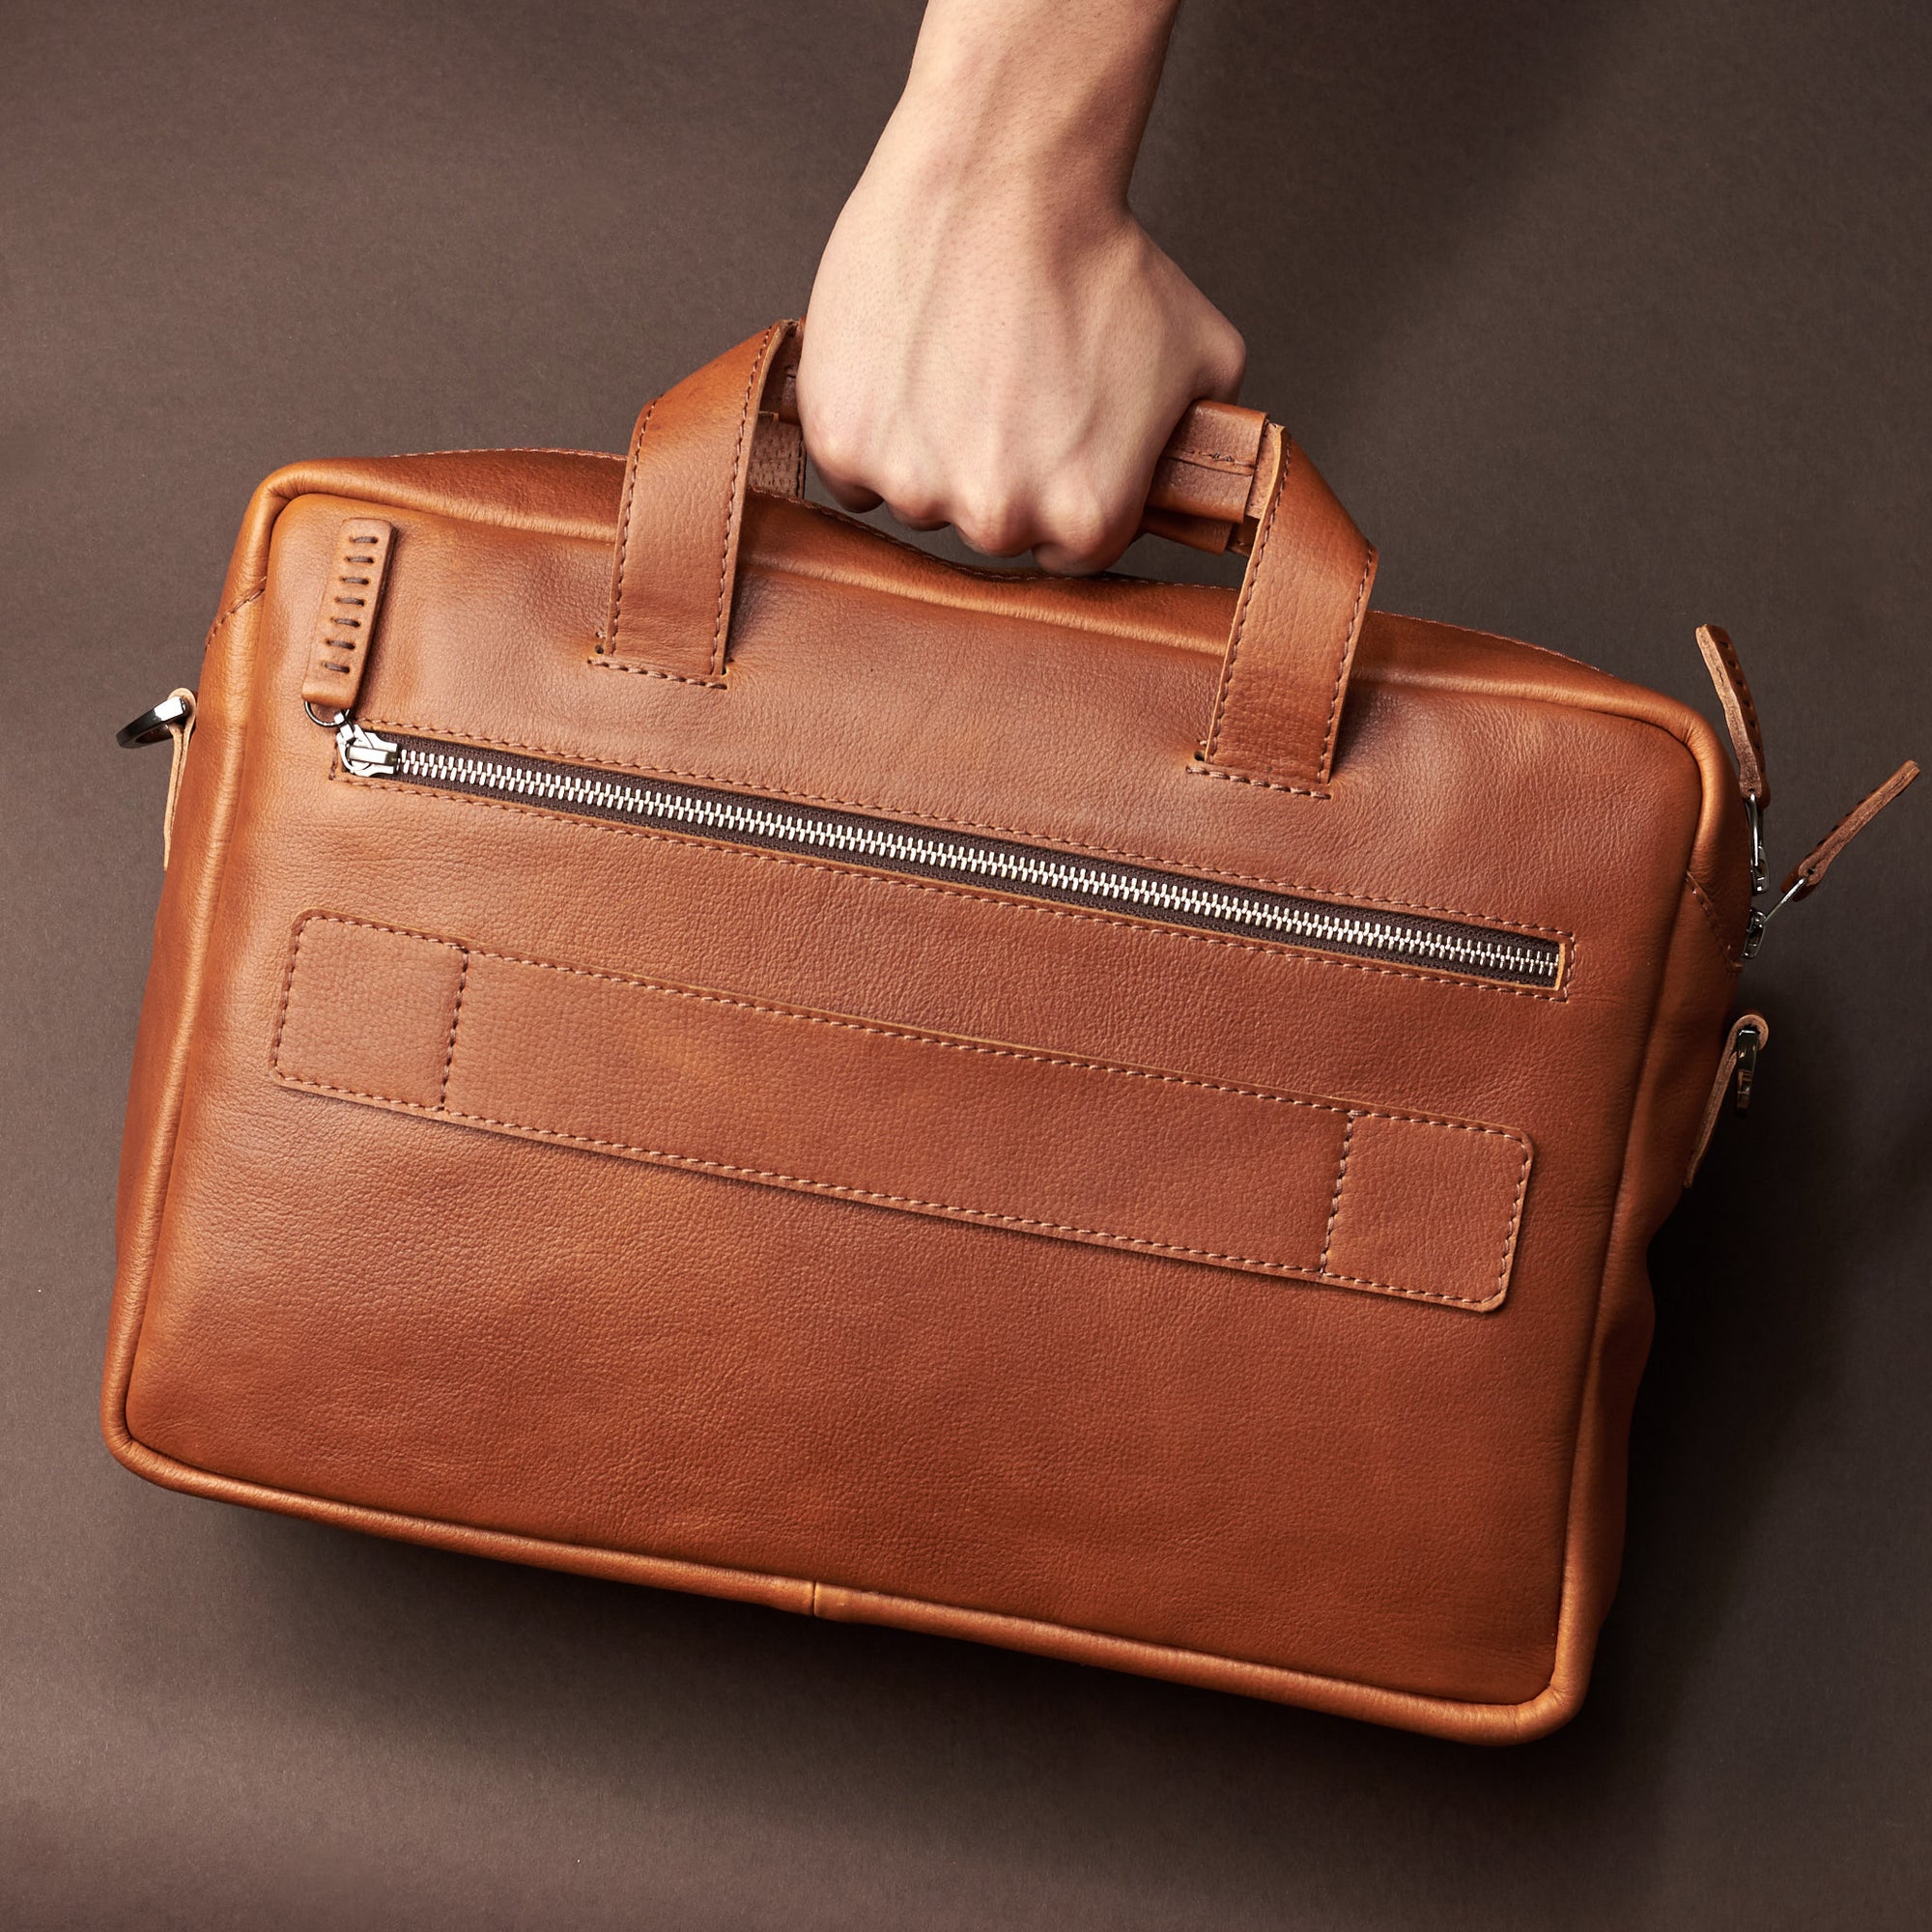 Carrying styling.- Tan handmade leather messenger bag for Men by Capra Leather. Tech bag, mens weekender bag 